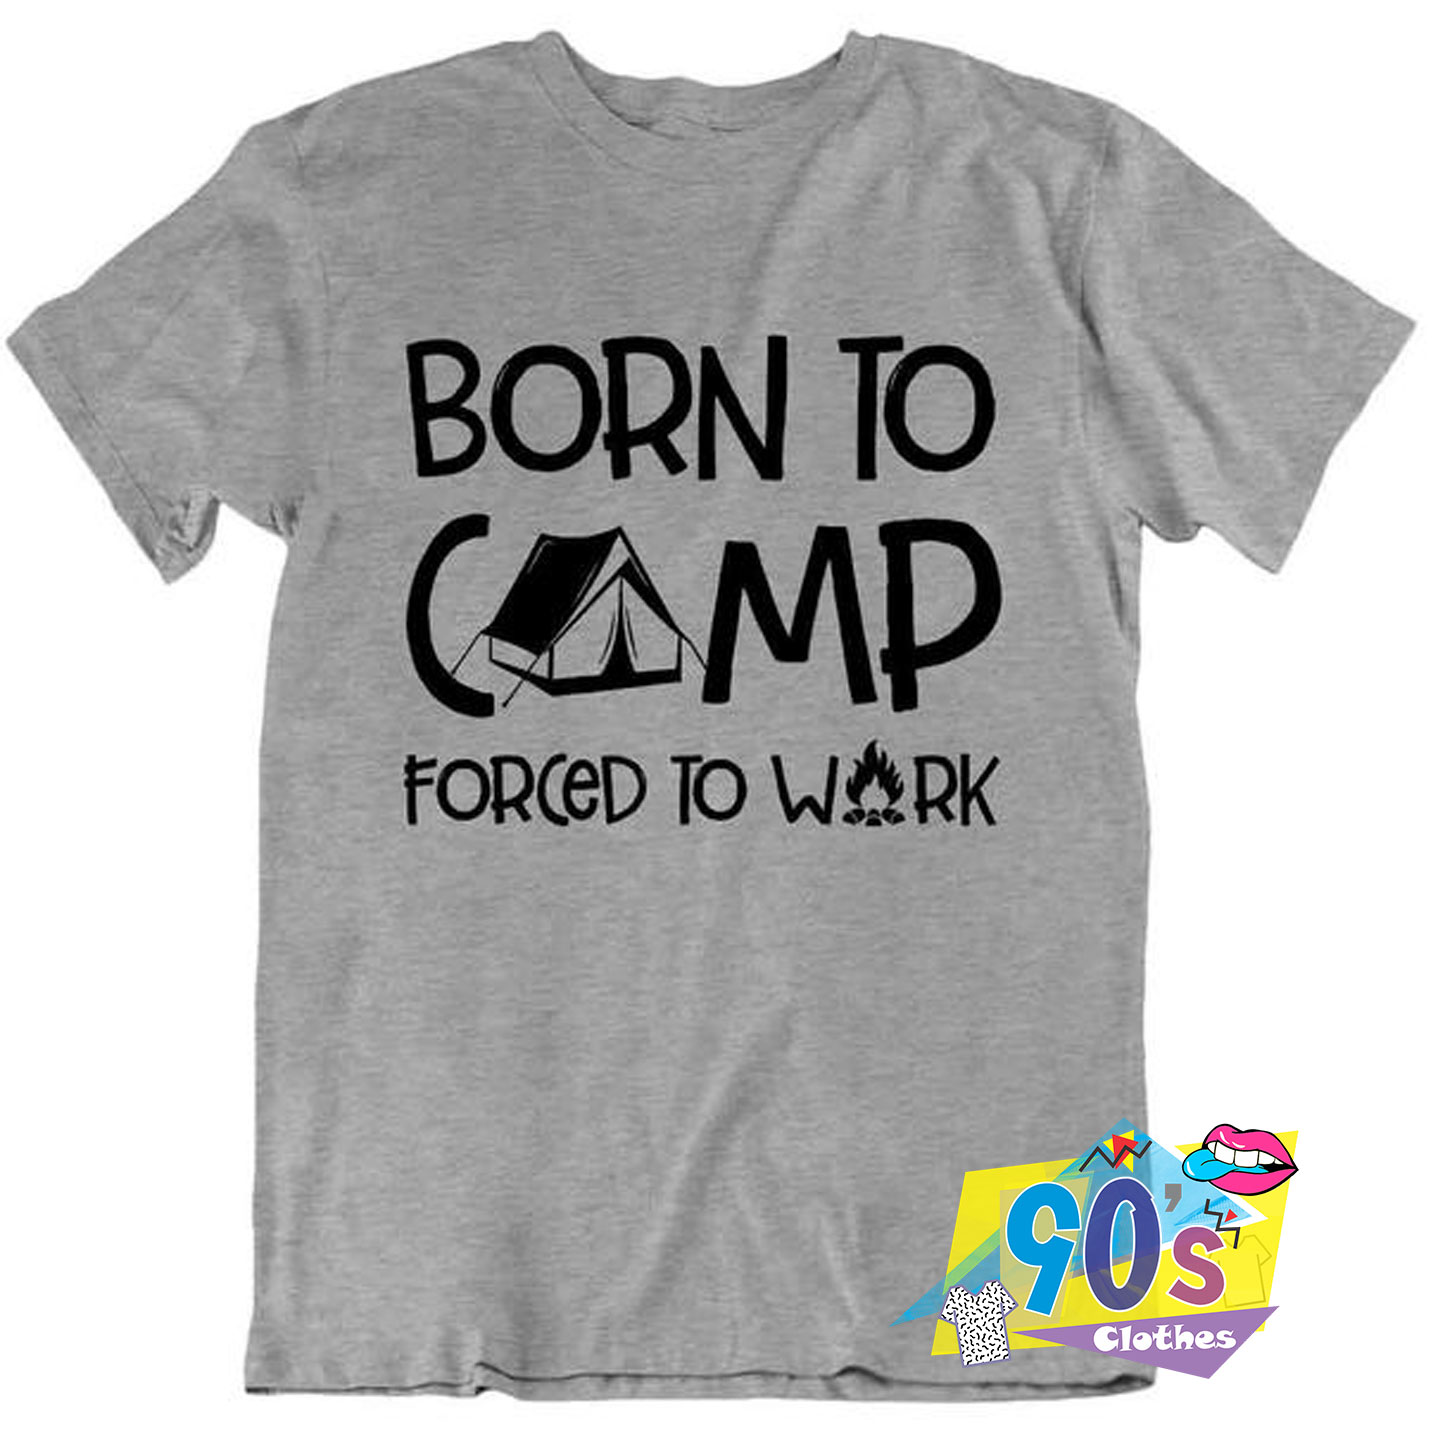 camping trip t shirt ideas